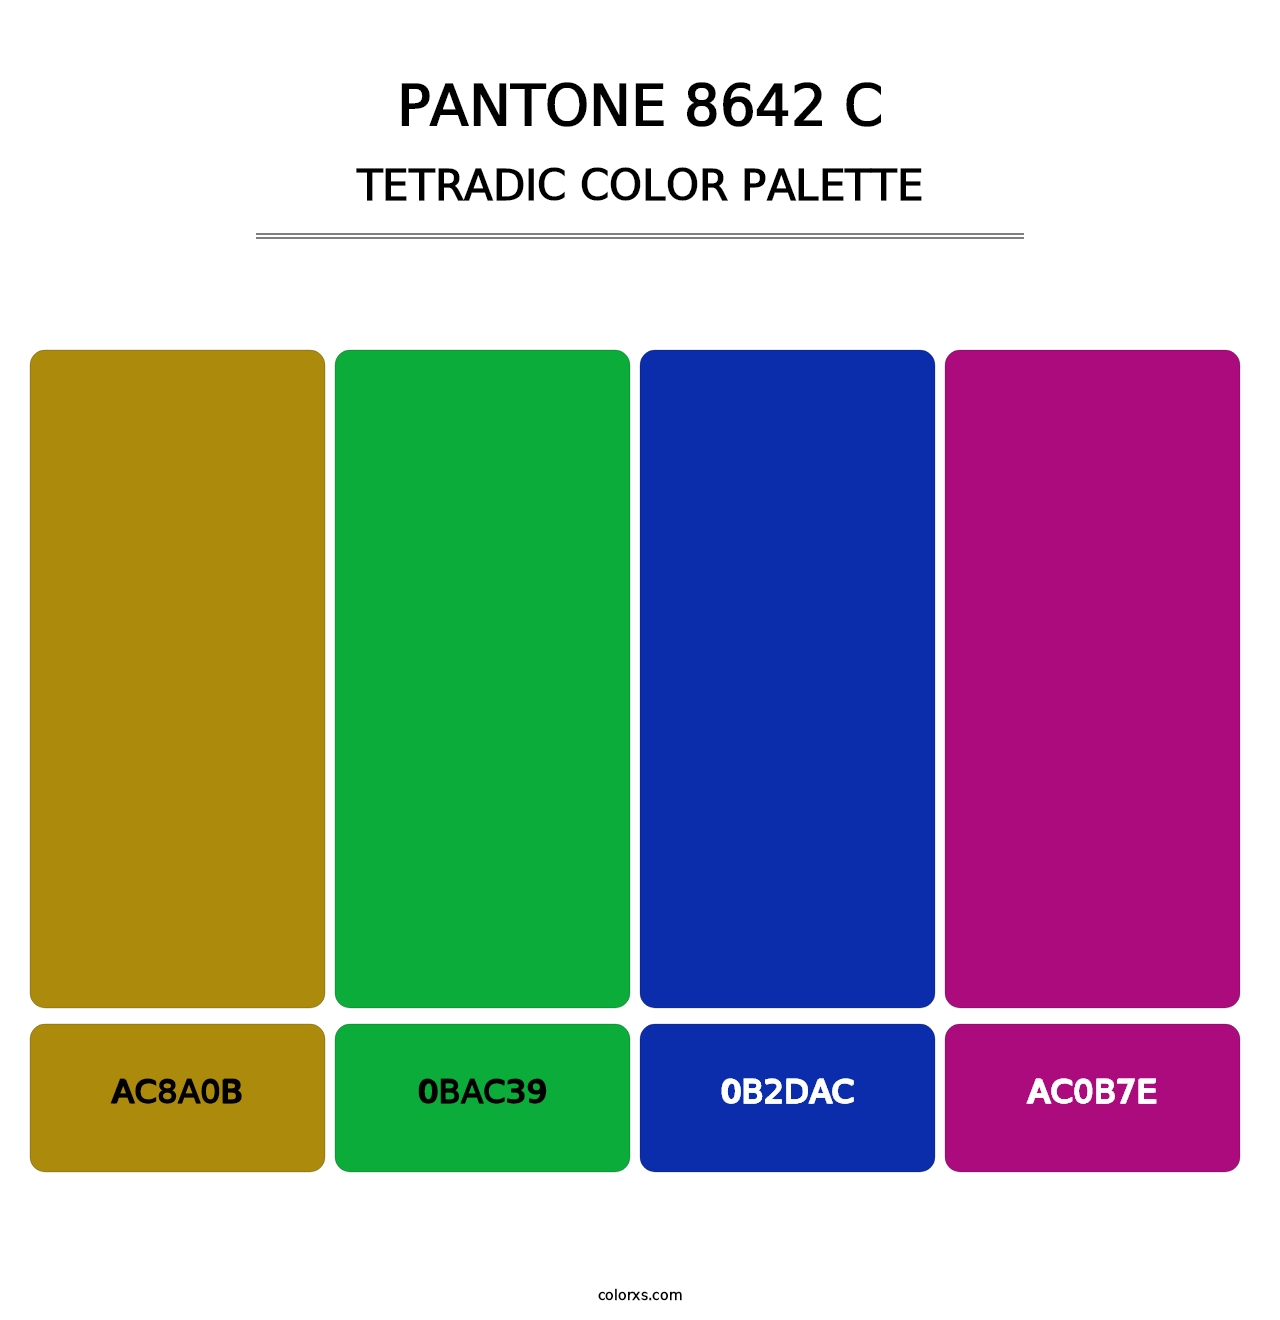 PANTONE 8642 C - Tetradic Color Palette